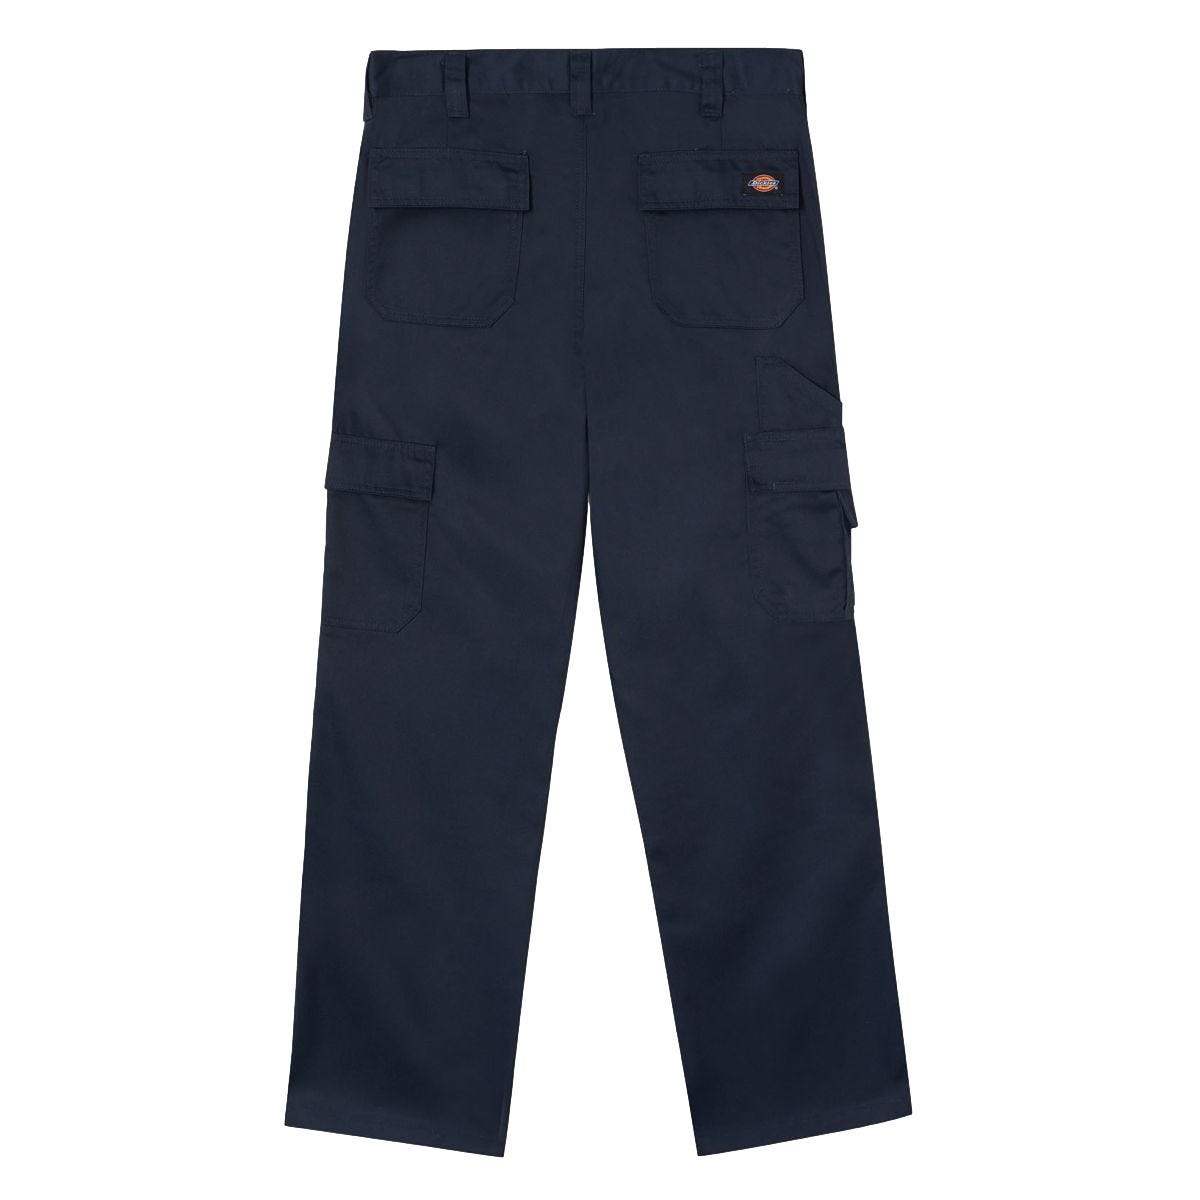 Pantalon Everyday Bleu marine - Dickies - Taille 50 1